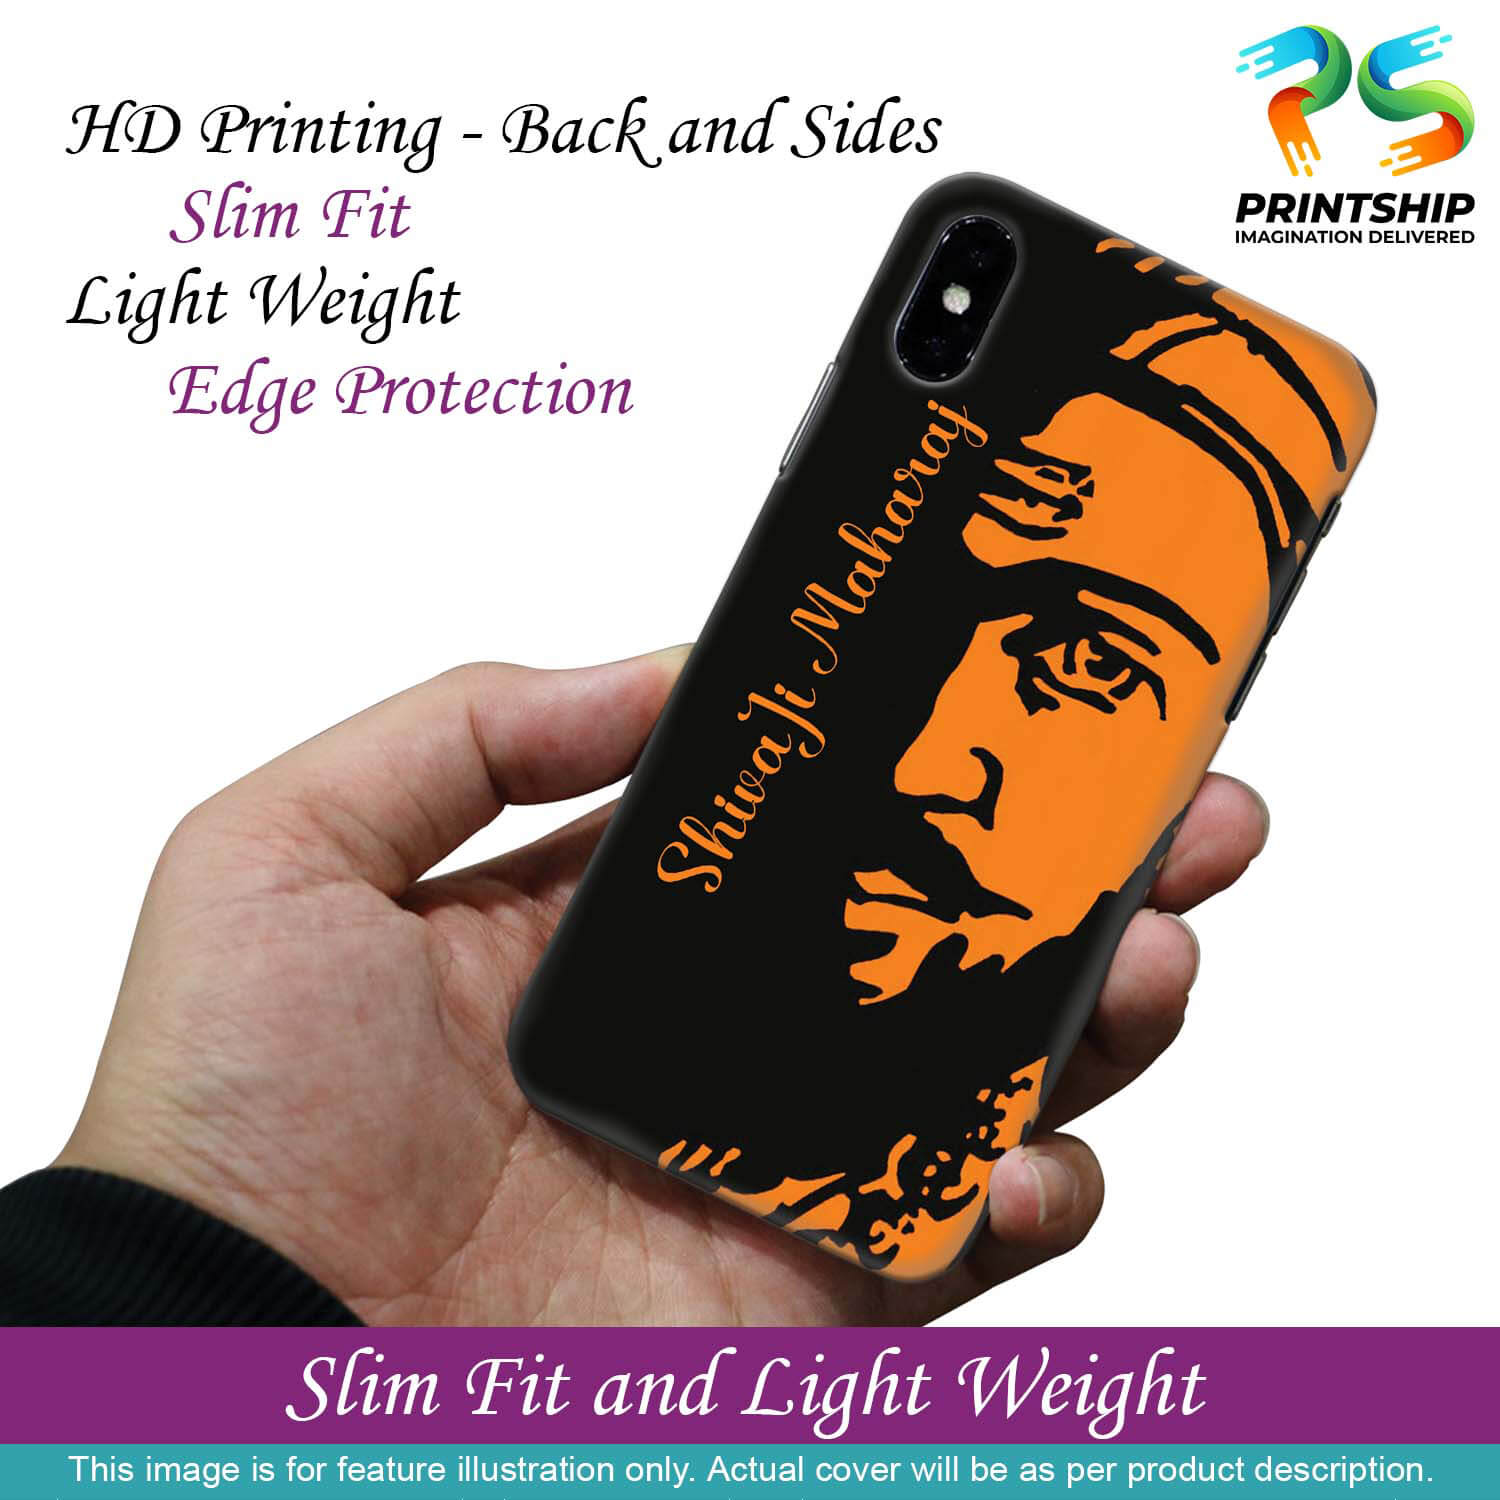 W0042-Shivaji Maharaj Back Cover for Samsung Galaxy A51